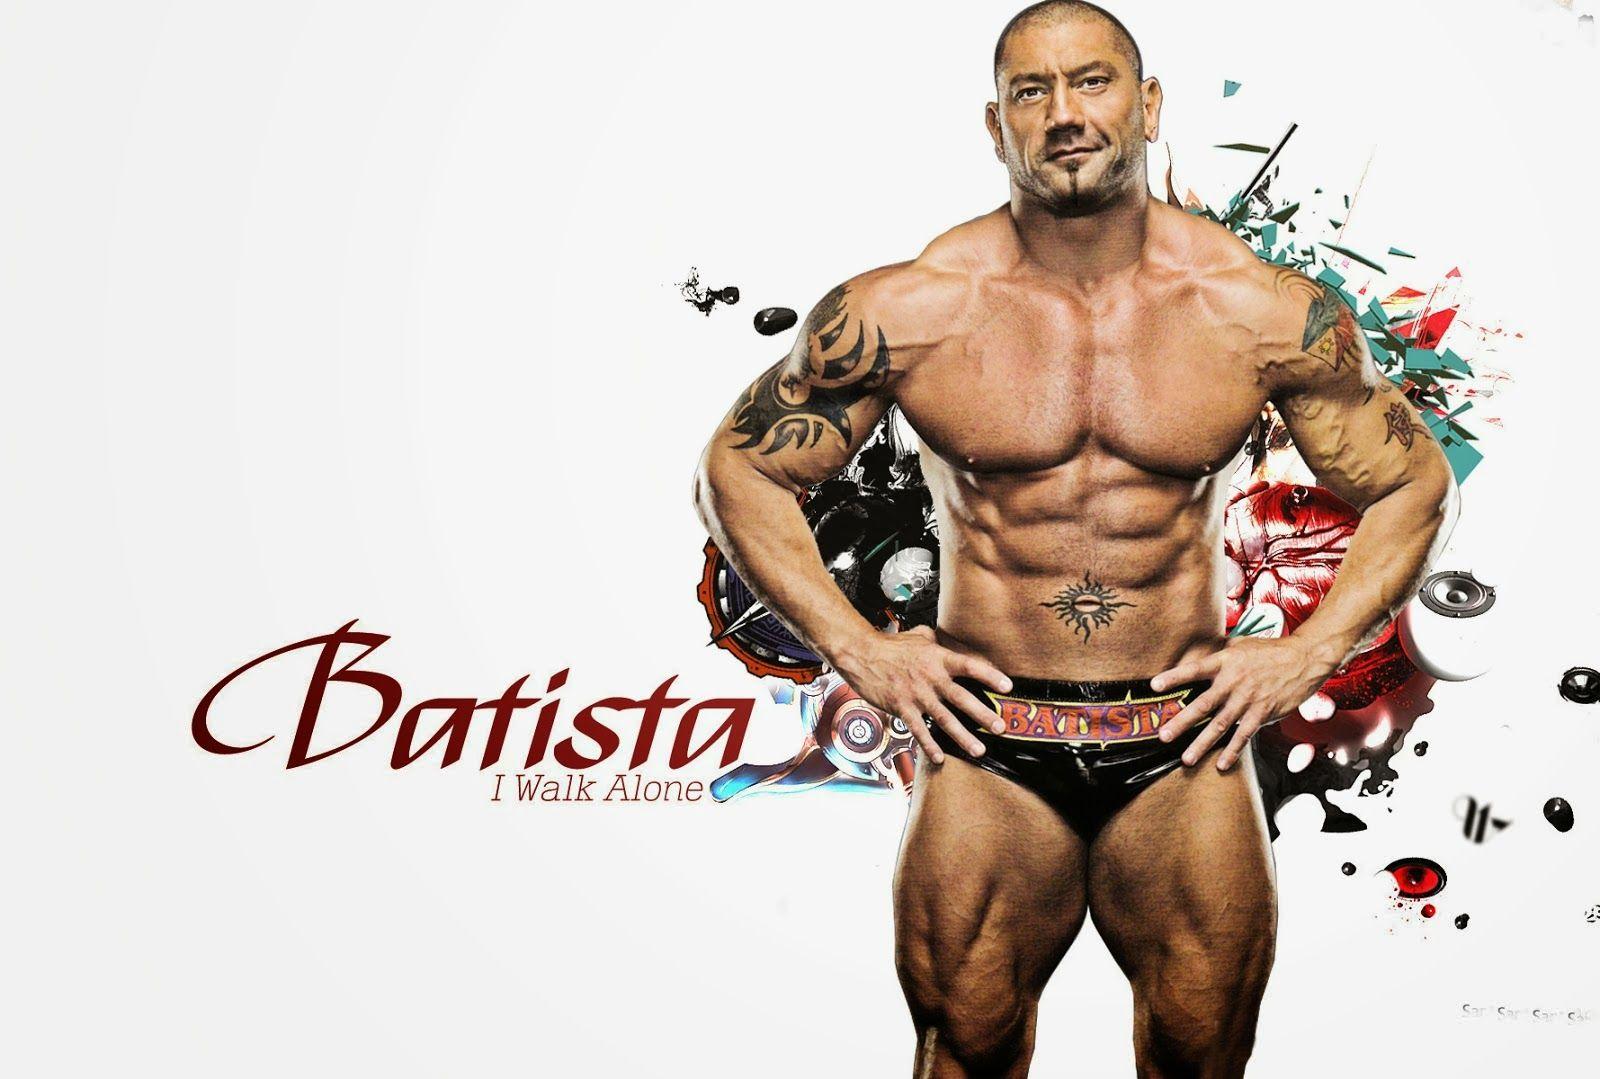 WWE Star Dave Batista HD Wallpaper Wallpaper Blog. Image